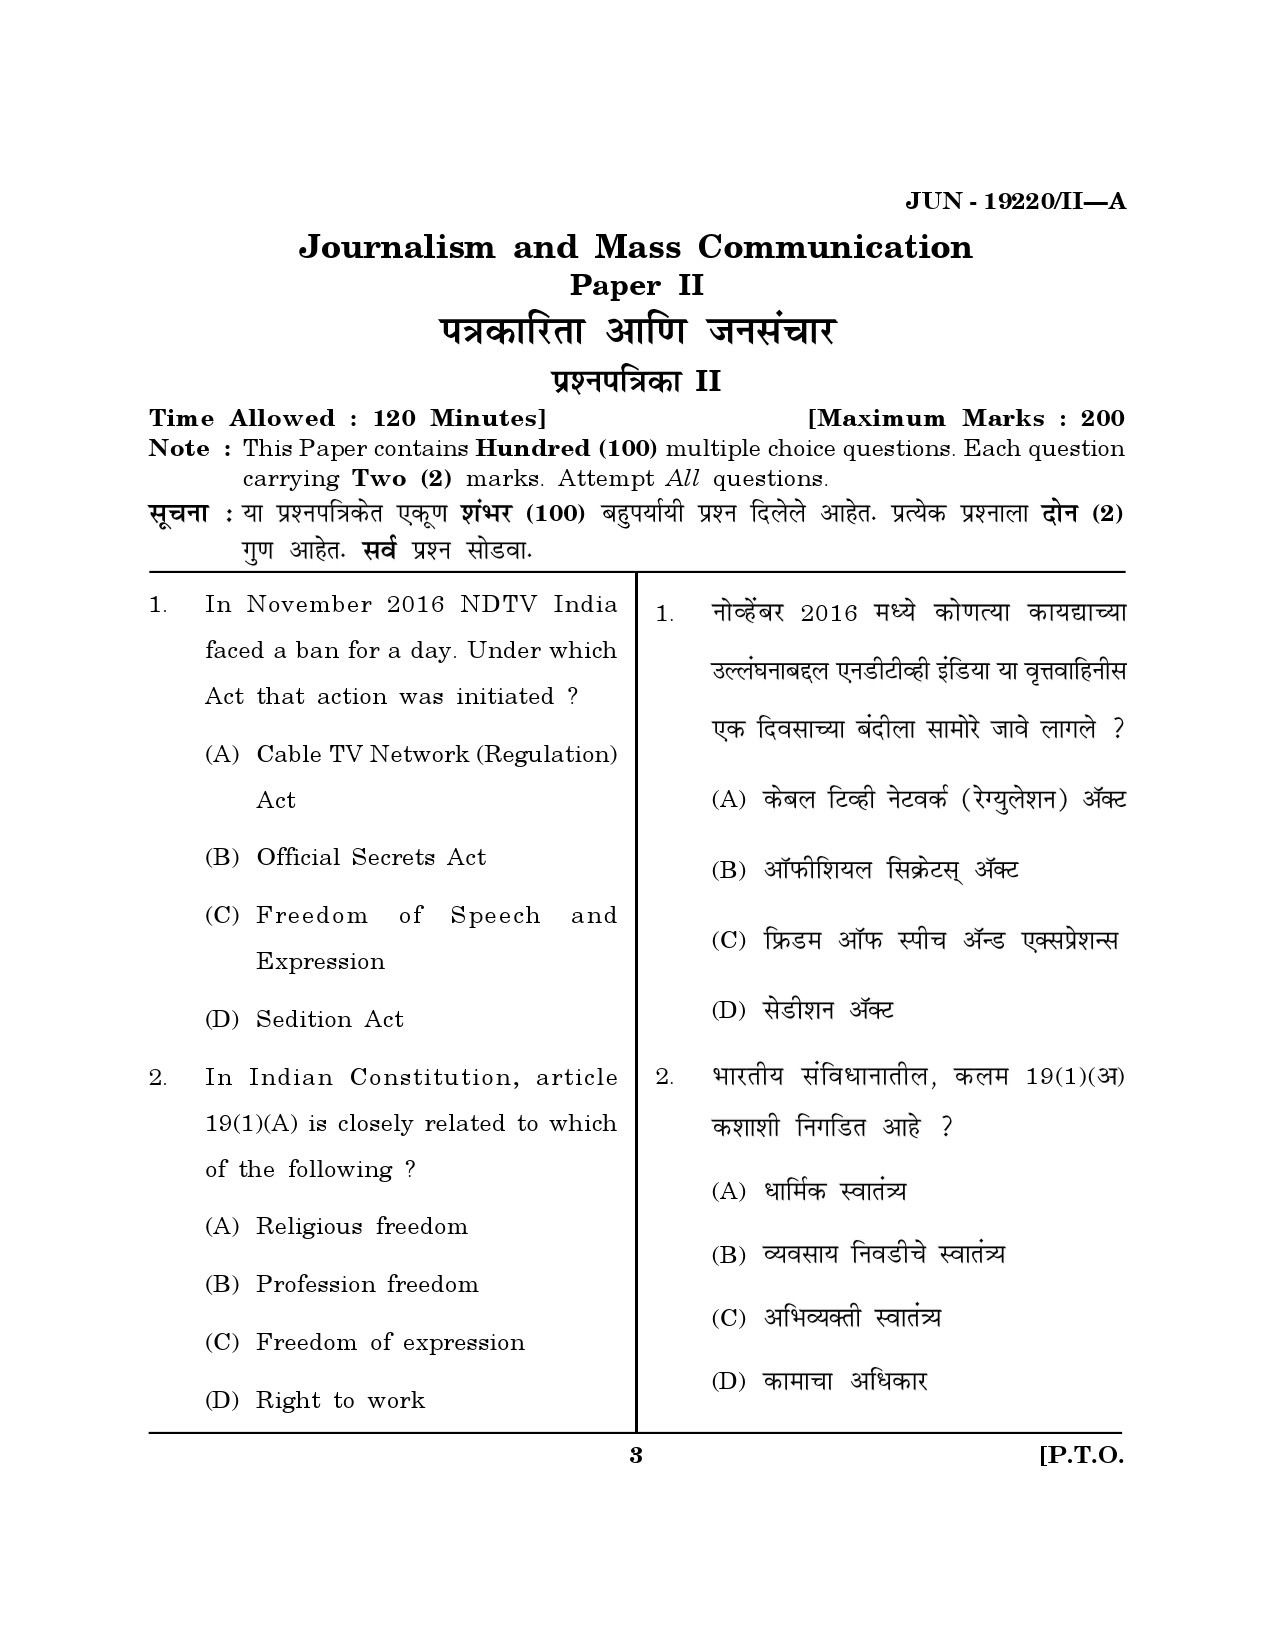 Maharashtra SET Journalism and Mass Communication Question Paper II June 2020 2